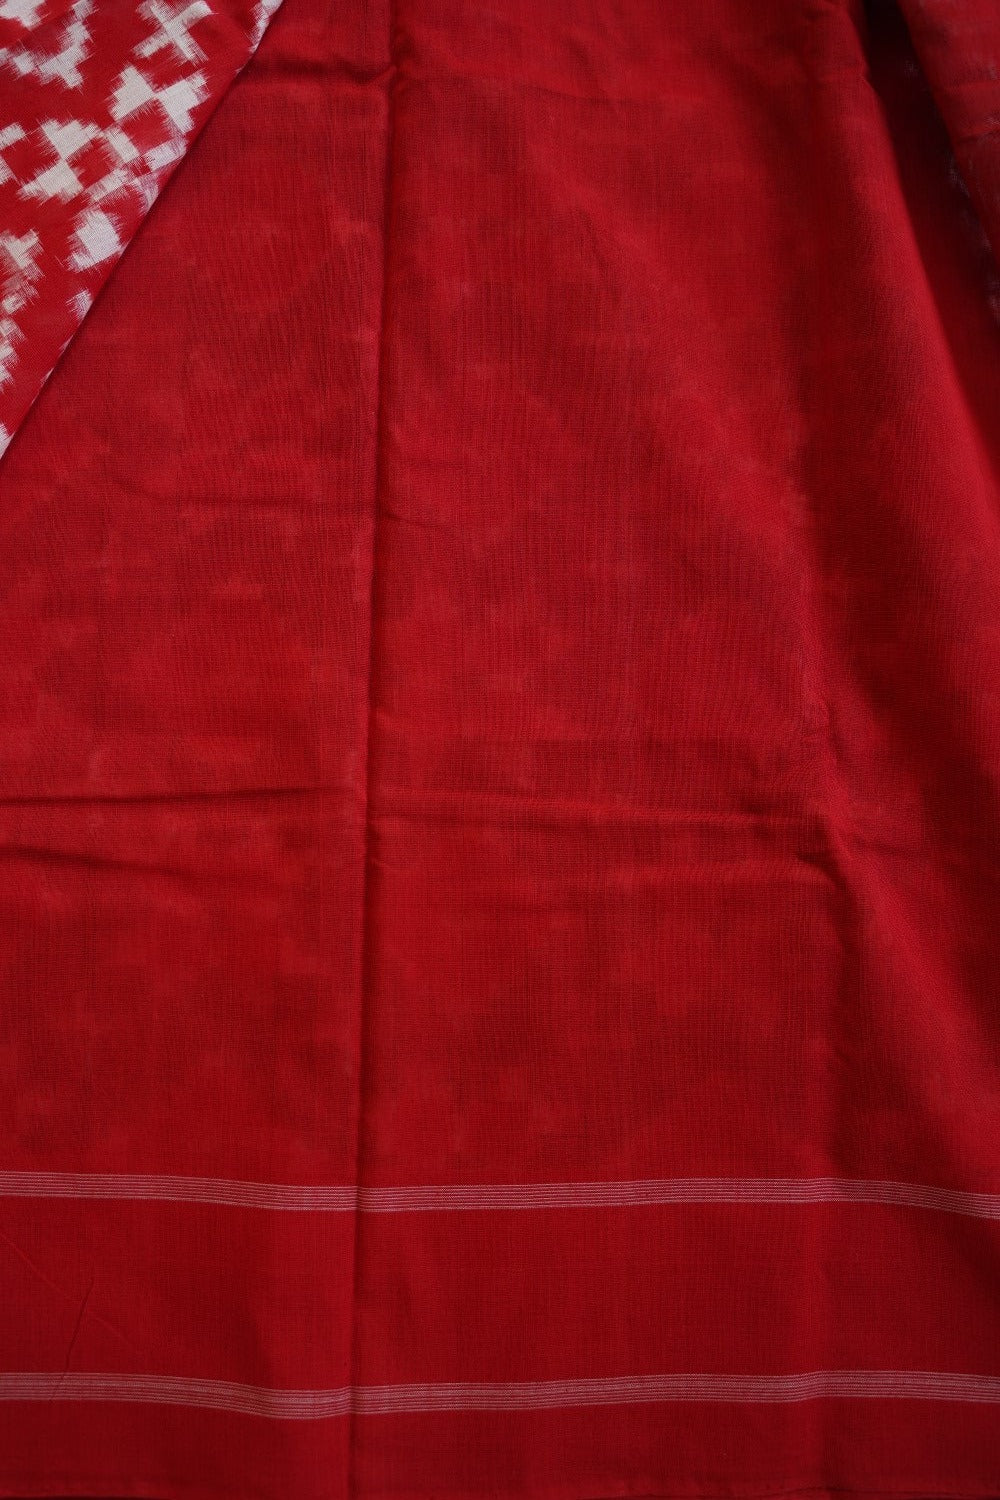 Telia Rummal Ikat handloom Cotton Saree PC11599